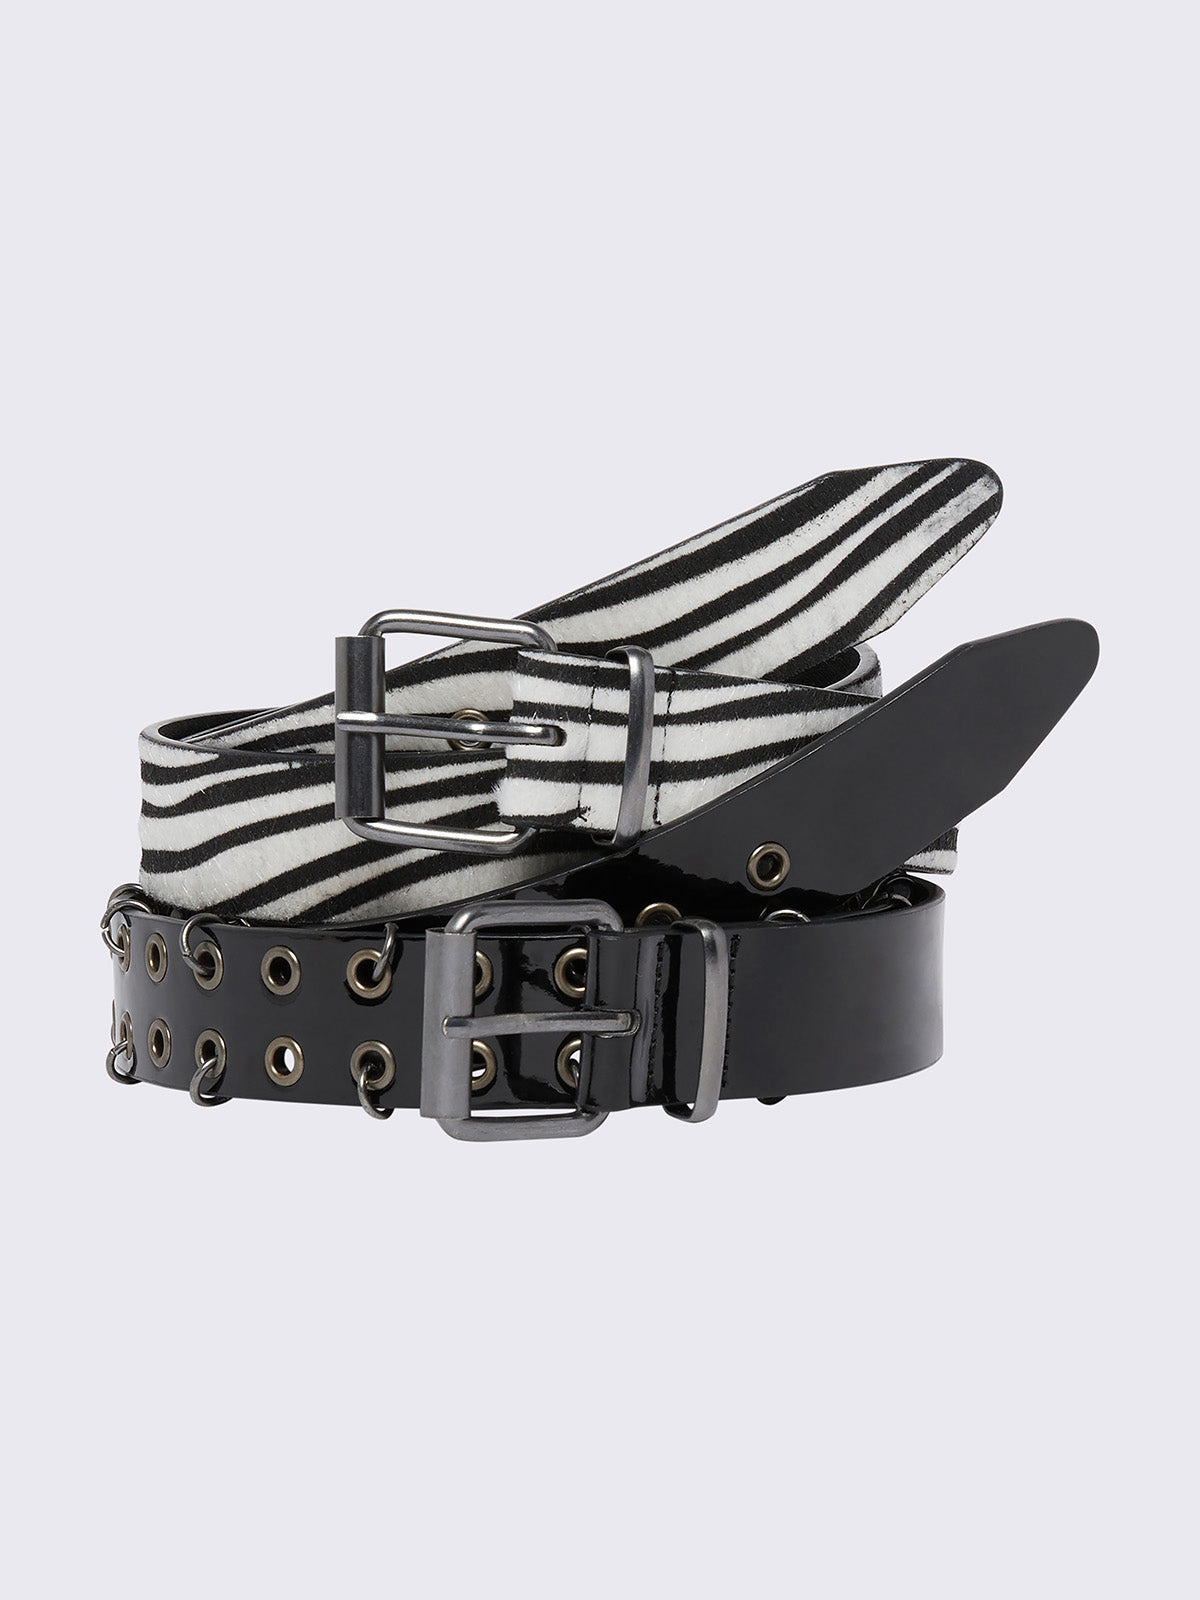 Set of 2 belts - zebra and black leather